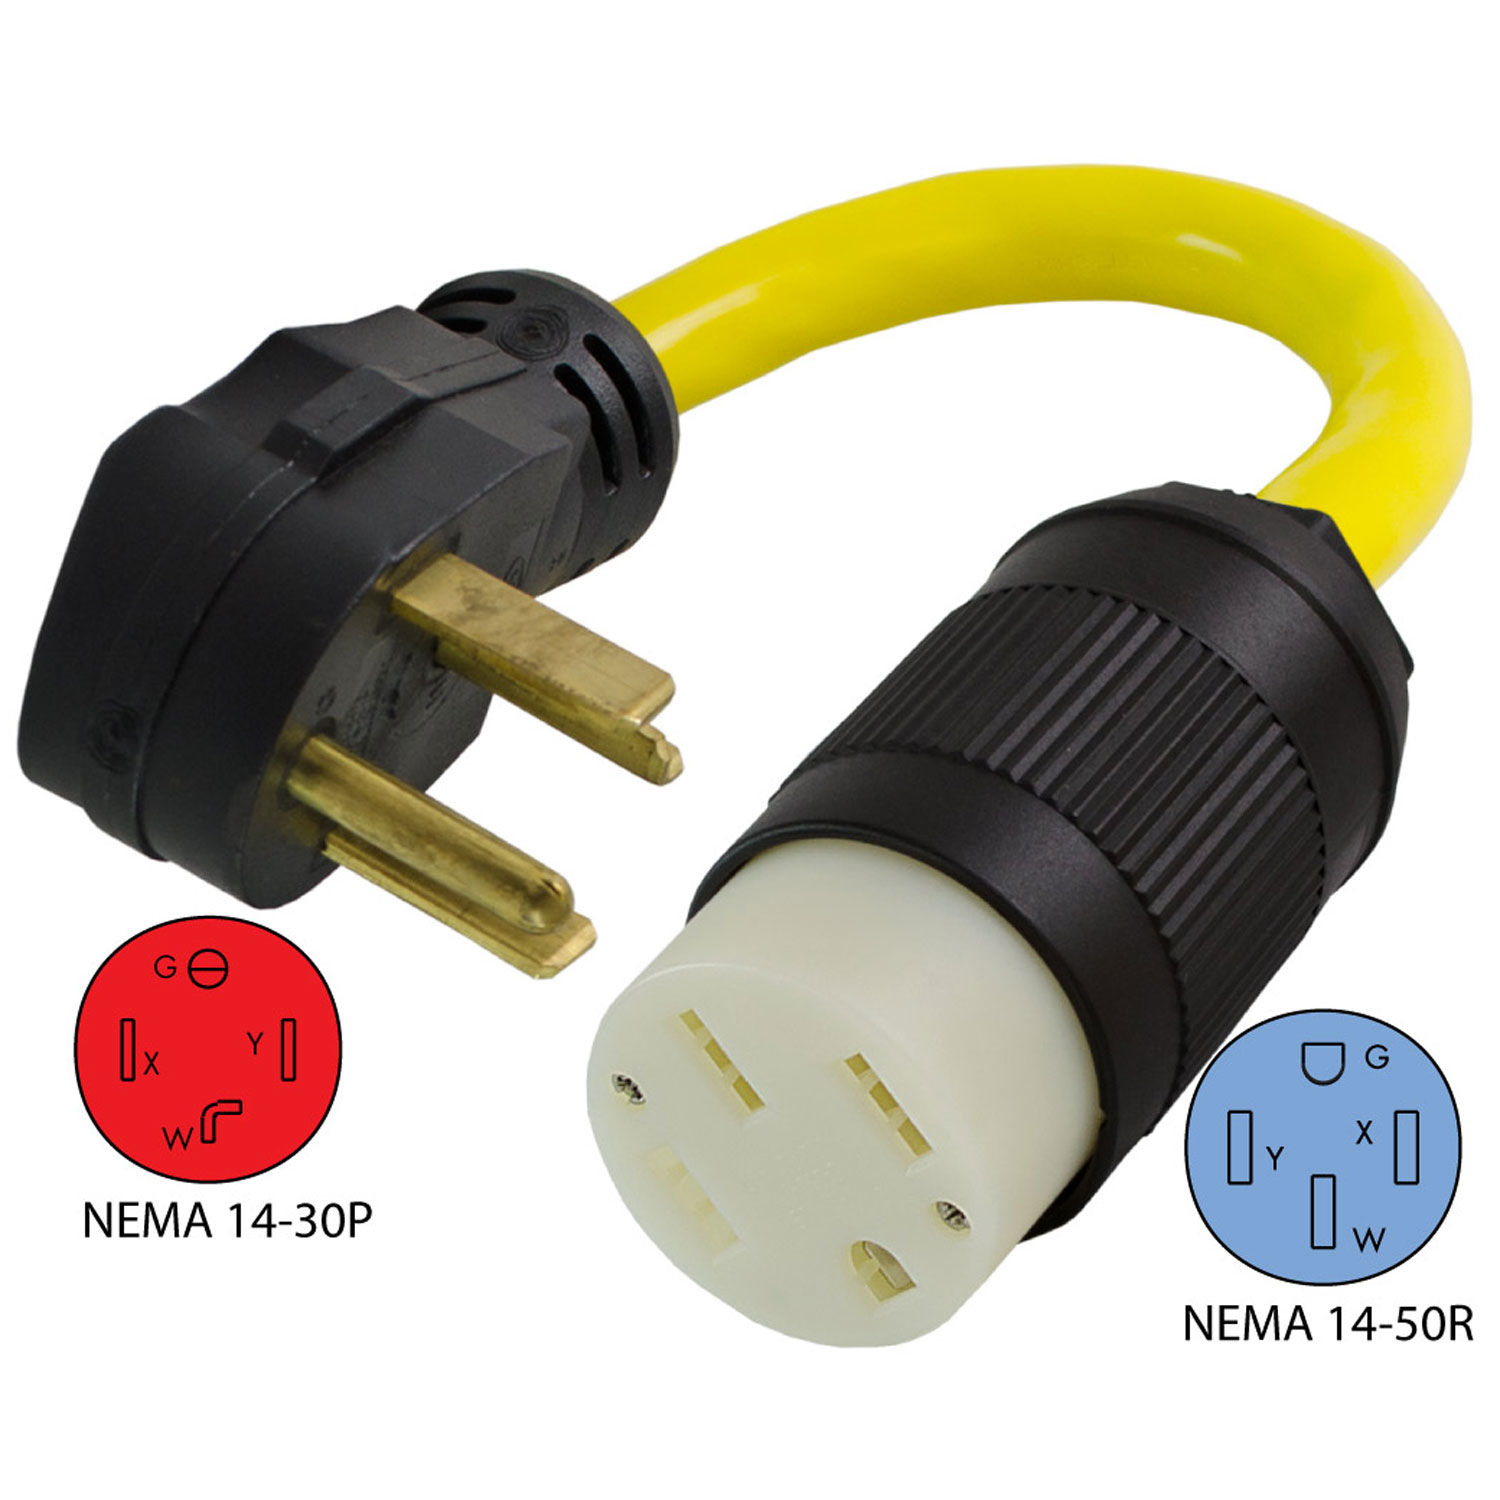 NEMA 1430P to NEMA 1450R Electric Vehicle Pigtail Adapter Cord eBay